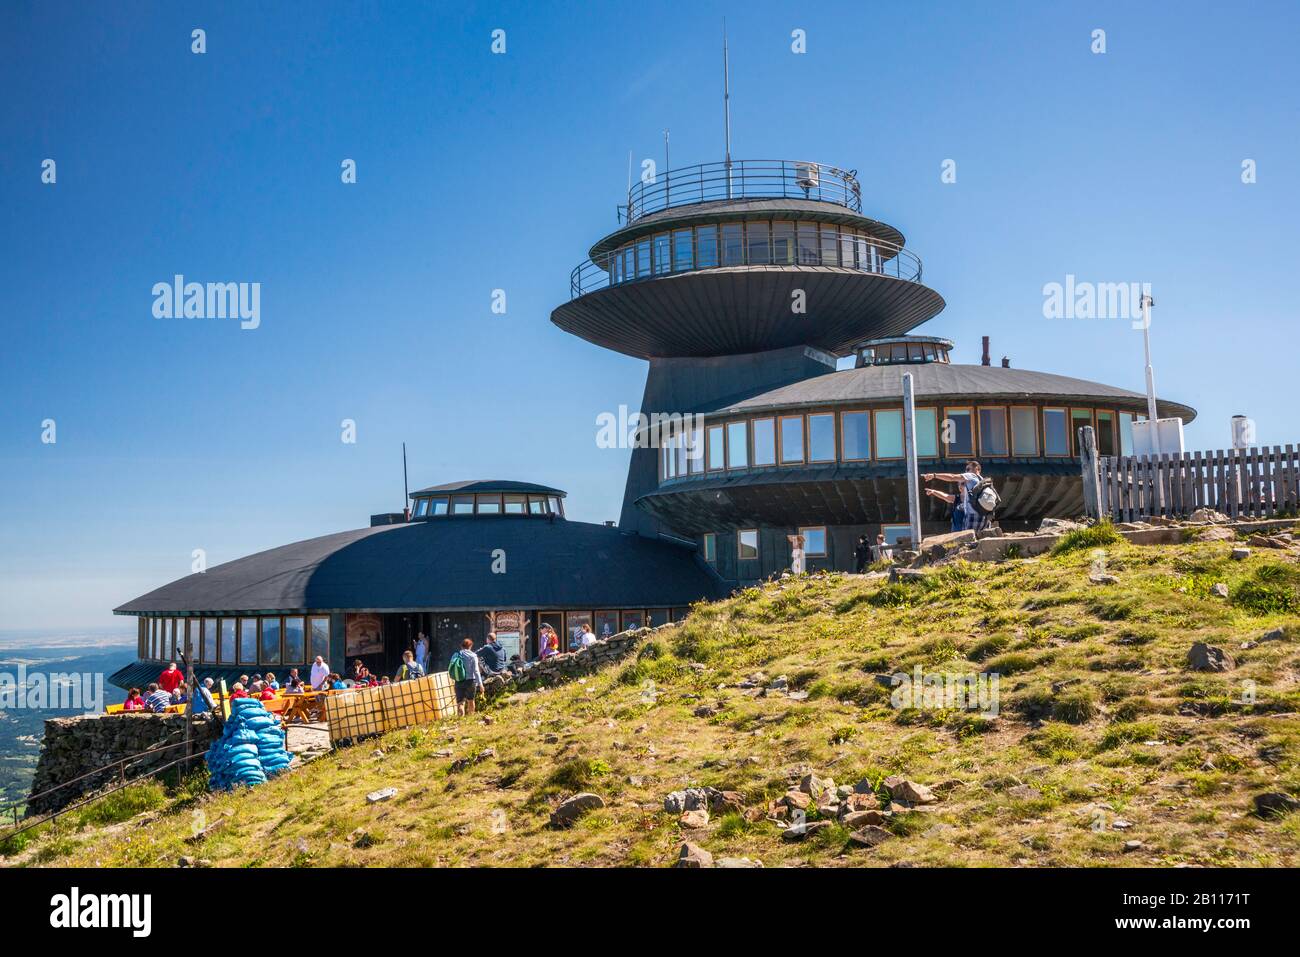 Meteo observatory and restaurant on Polish side of border with Czech Republic, on top of Sniezka, Karkonosze, Poland Stock Photo